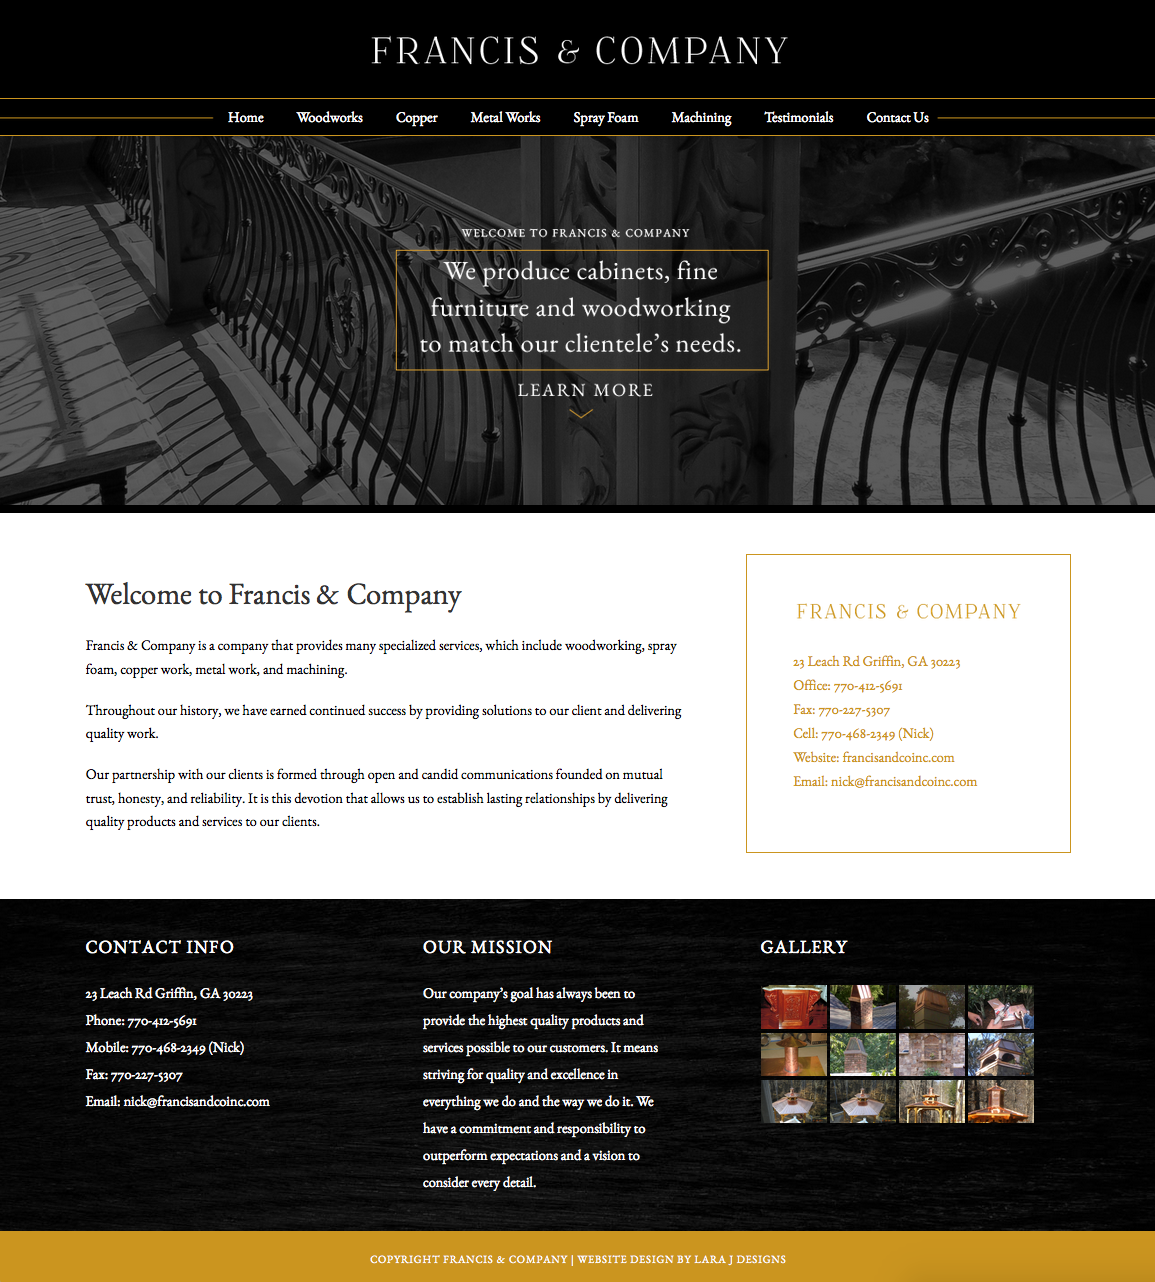 Francis & Company Website Design